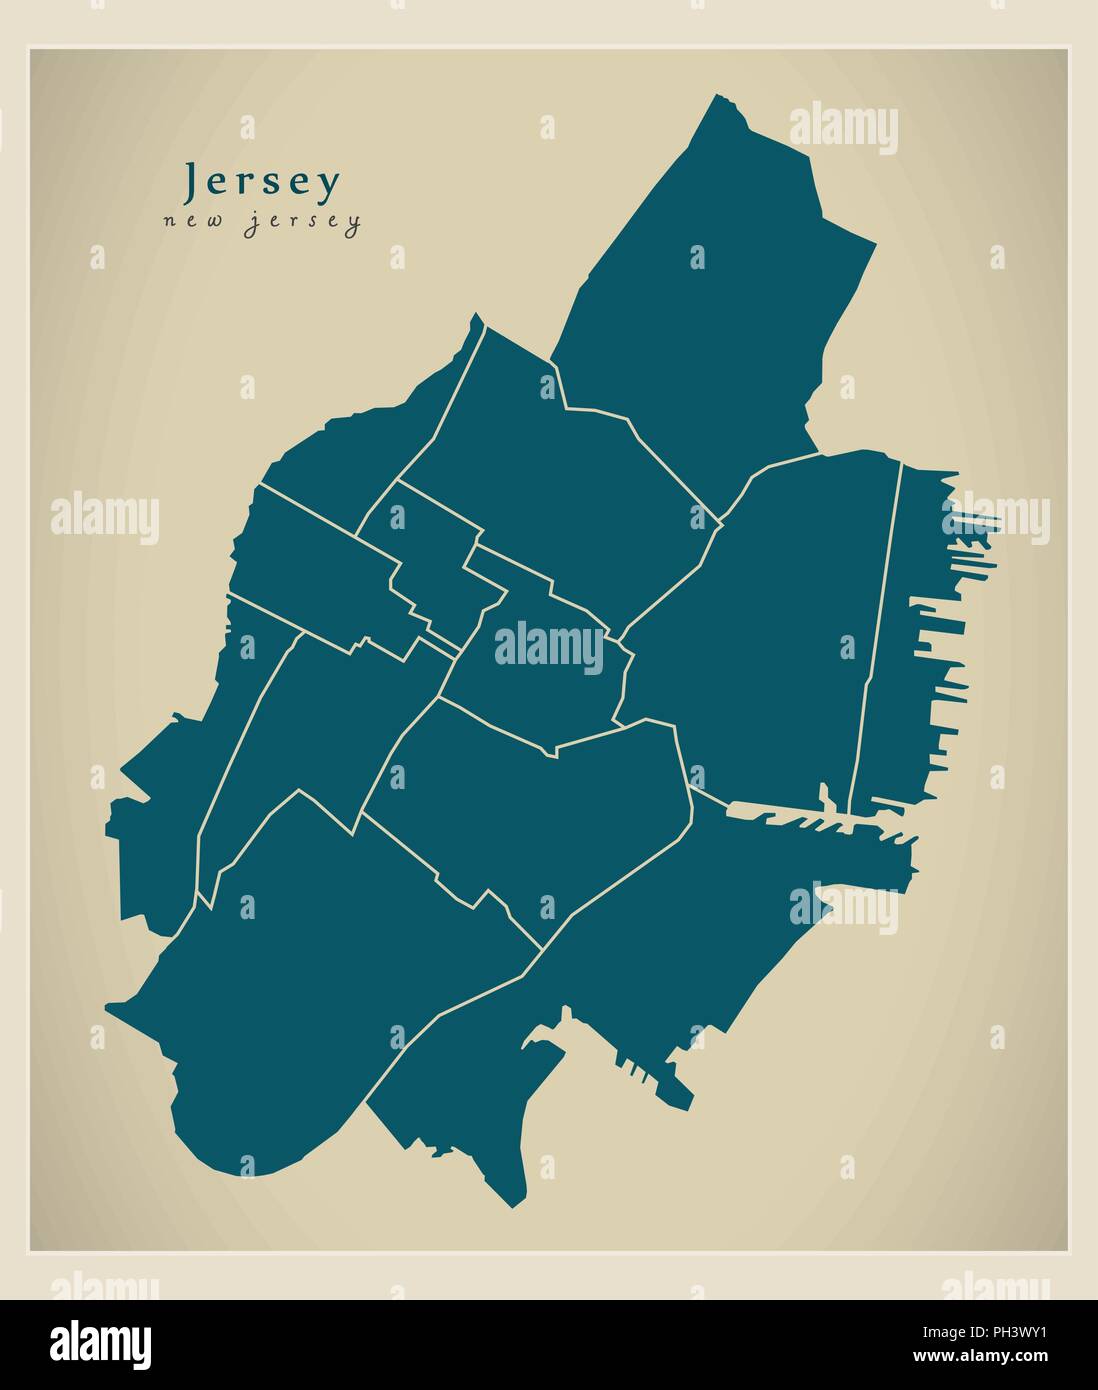 Moderne Stadtplan - Jersey New Jersey City der USA mit Nachbarschaften Stock Vektor